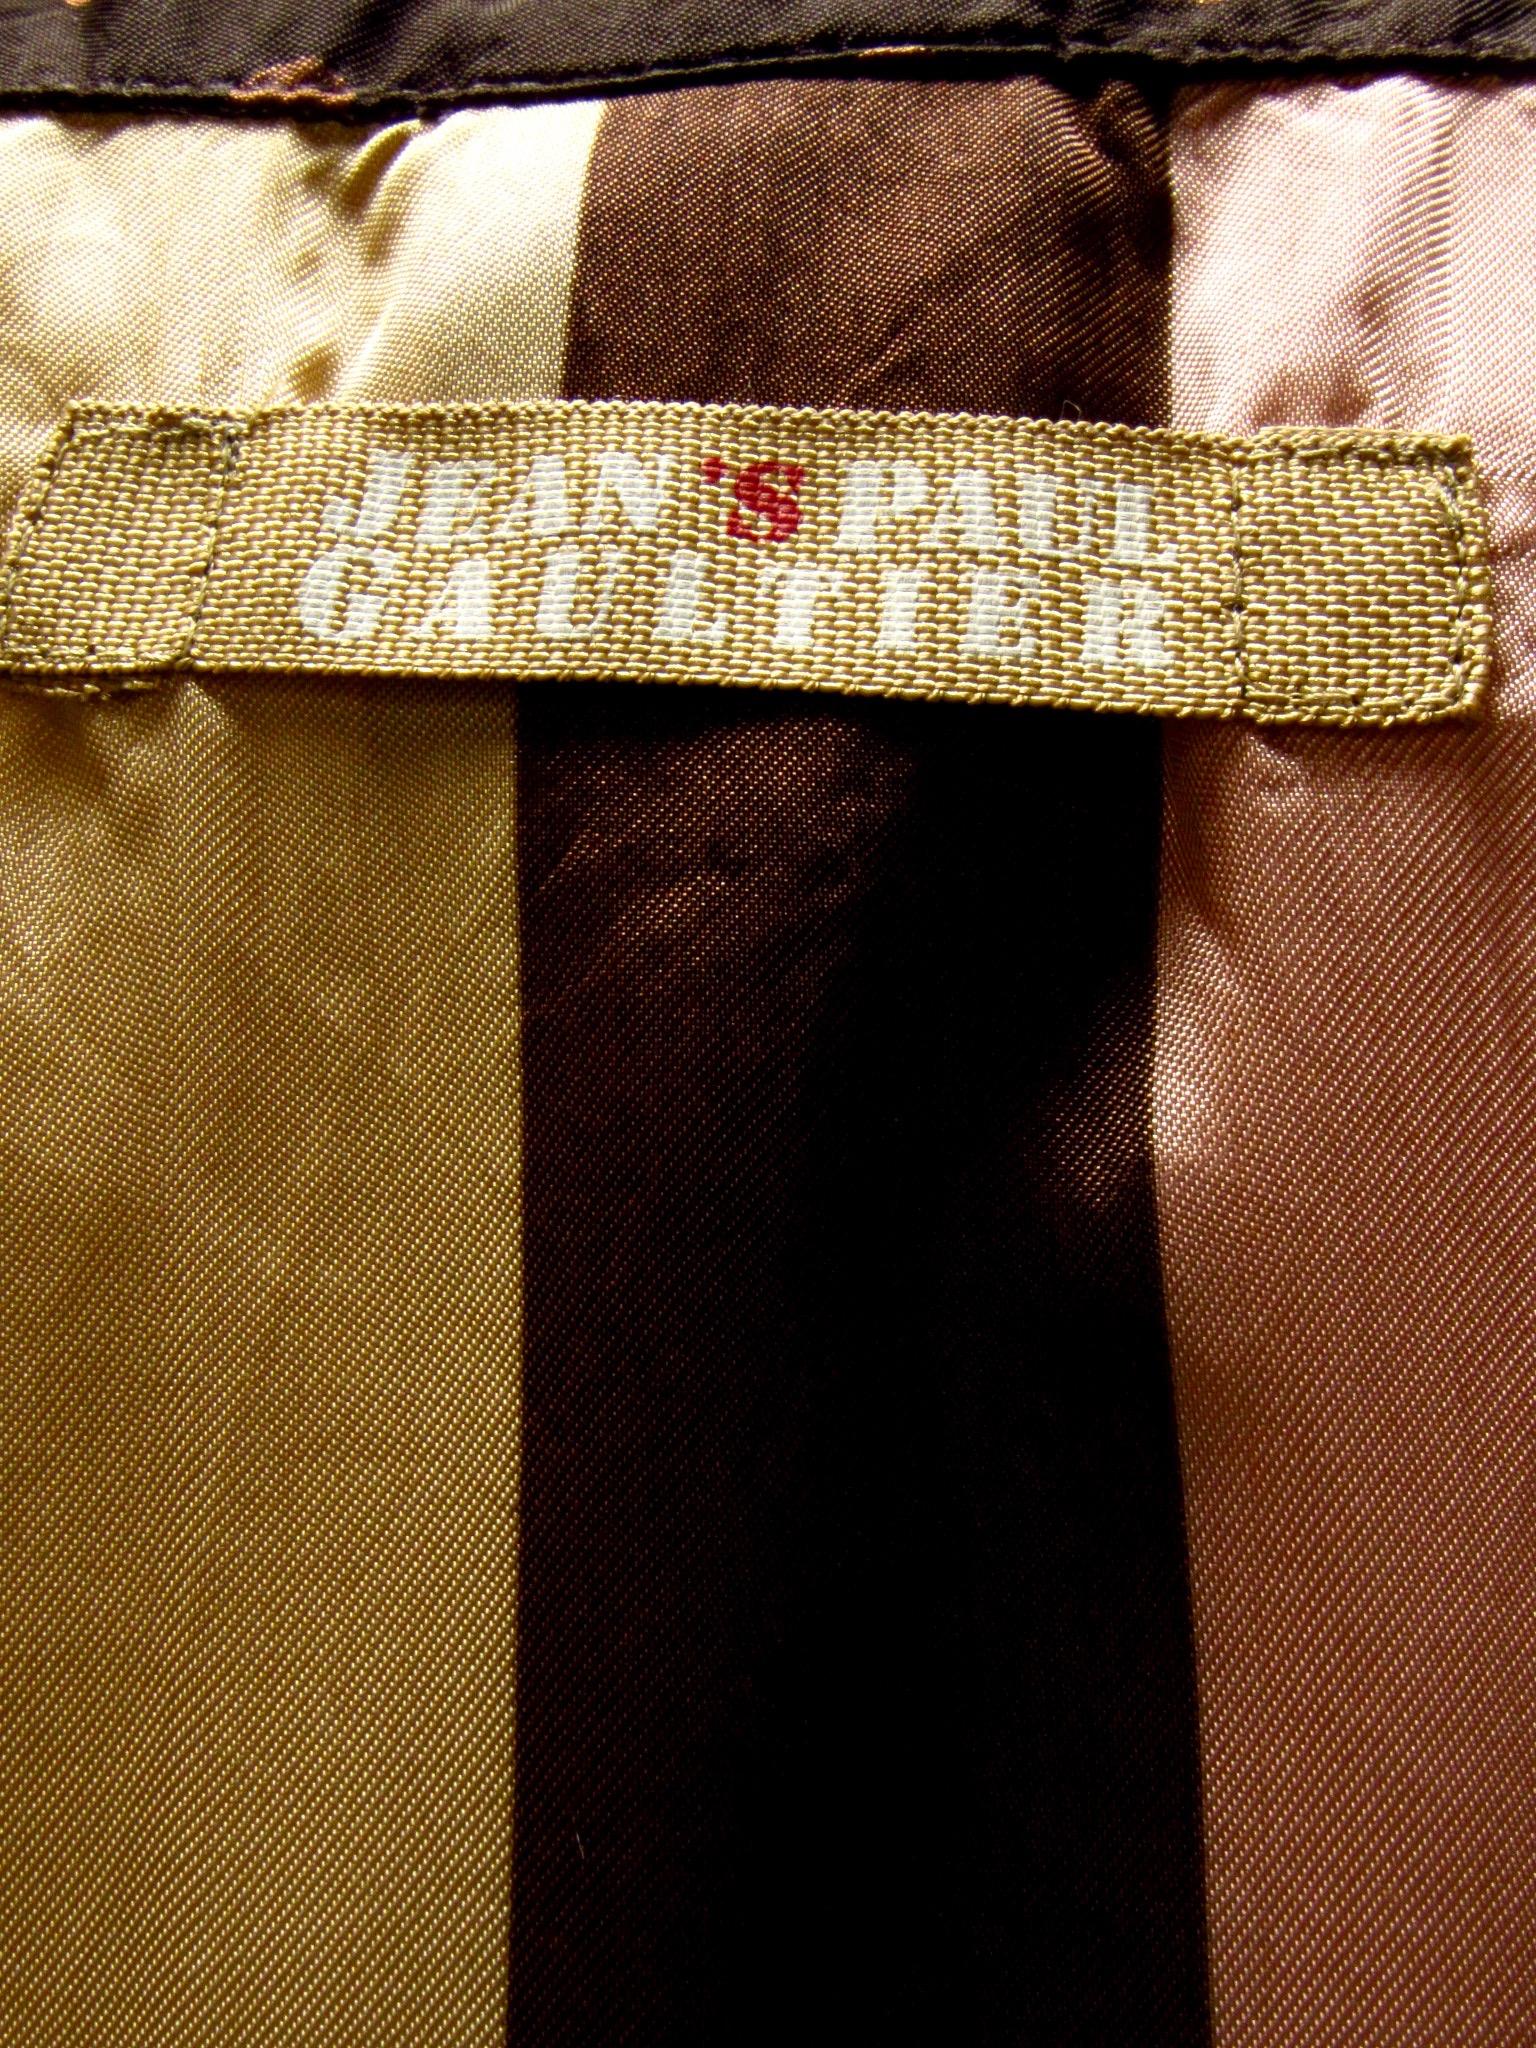 Cropped, Striped Jean Paul Gaultier Shrug Jacket 1